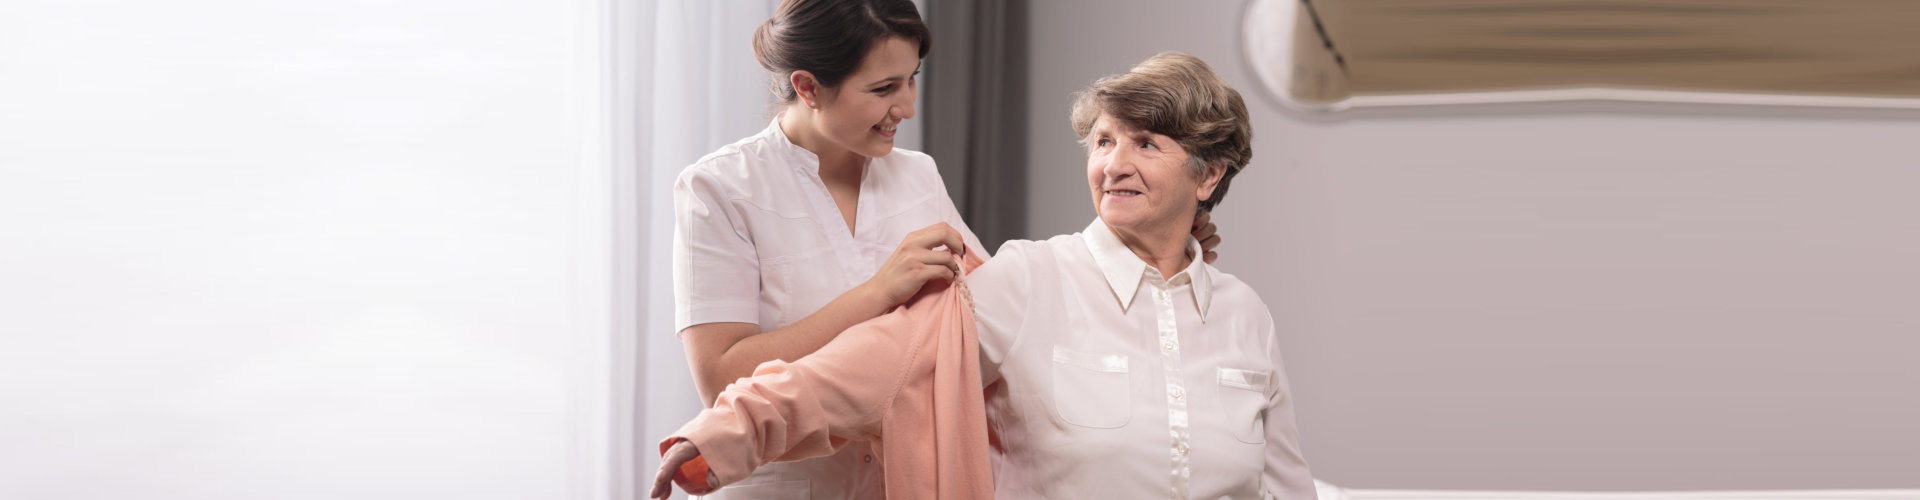 a caregiver assisting an elderly woman